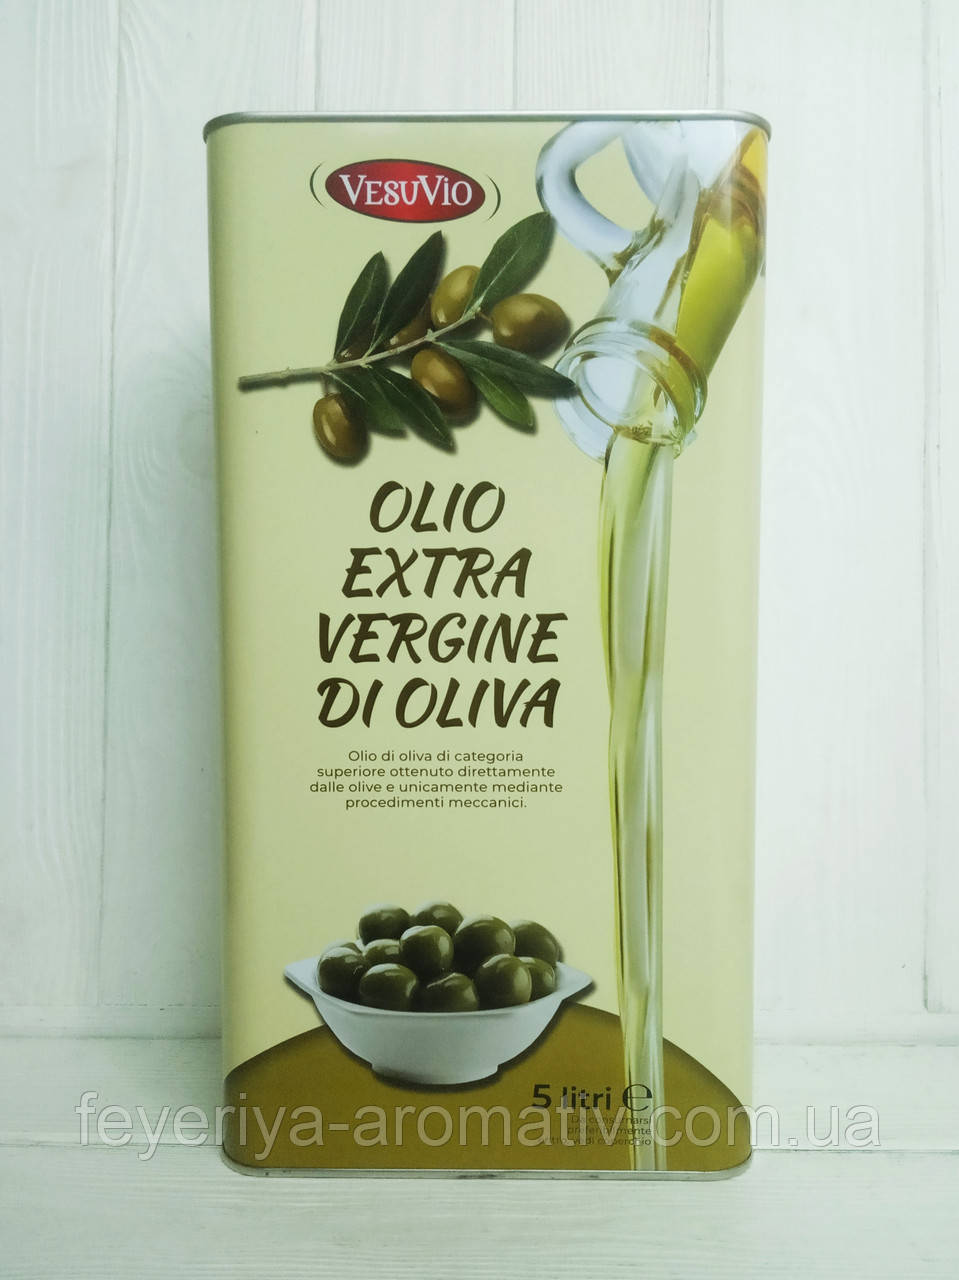 Оливковое масло vesuvio